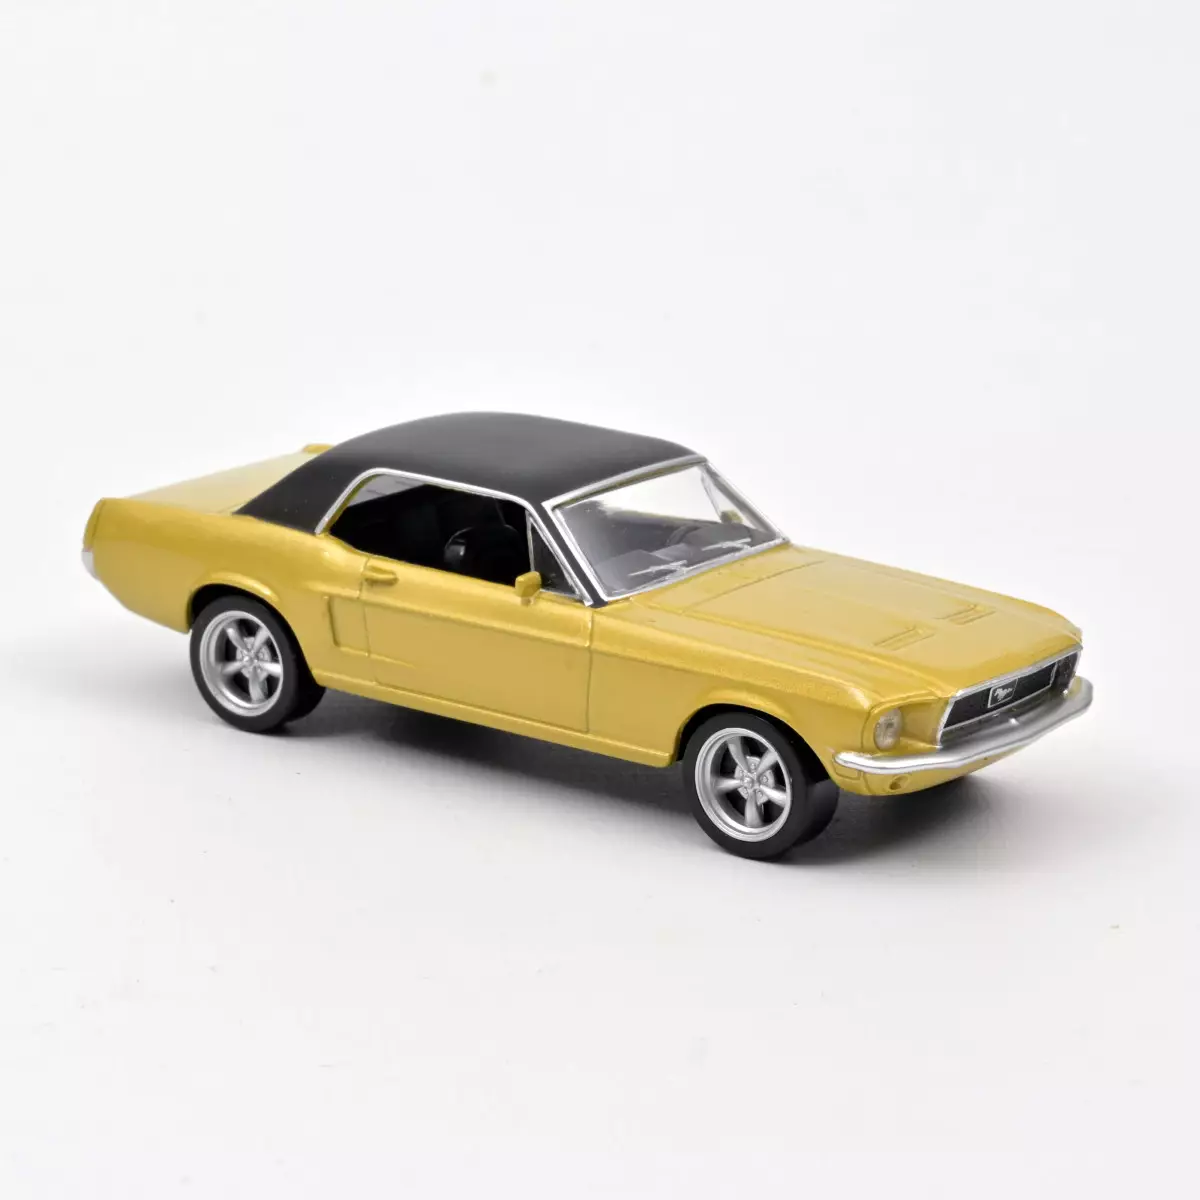 Ford Mustang coupé ´68 gold Jetcar / Jet cars 1:43